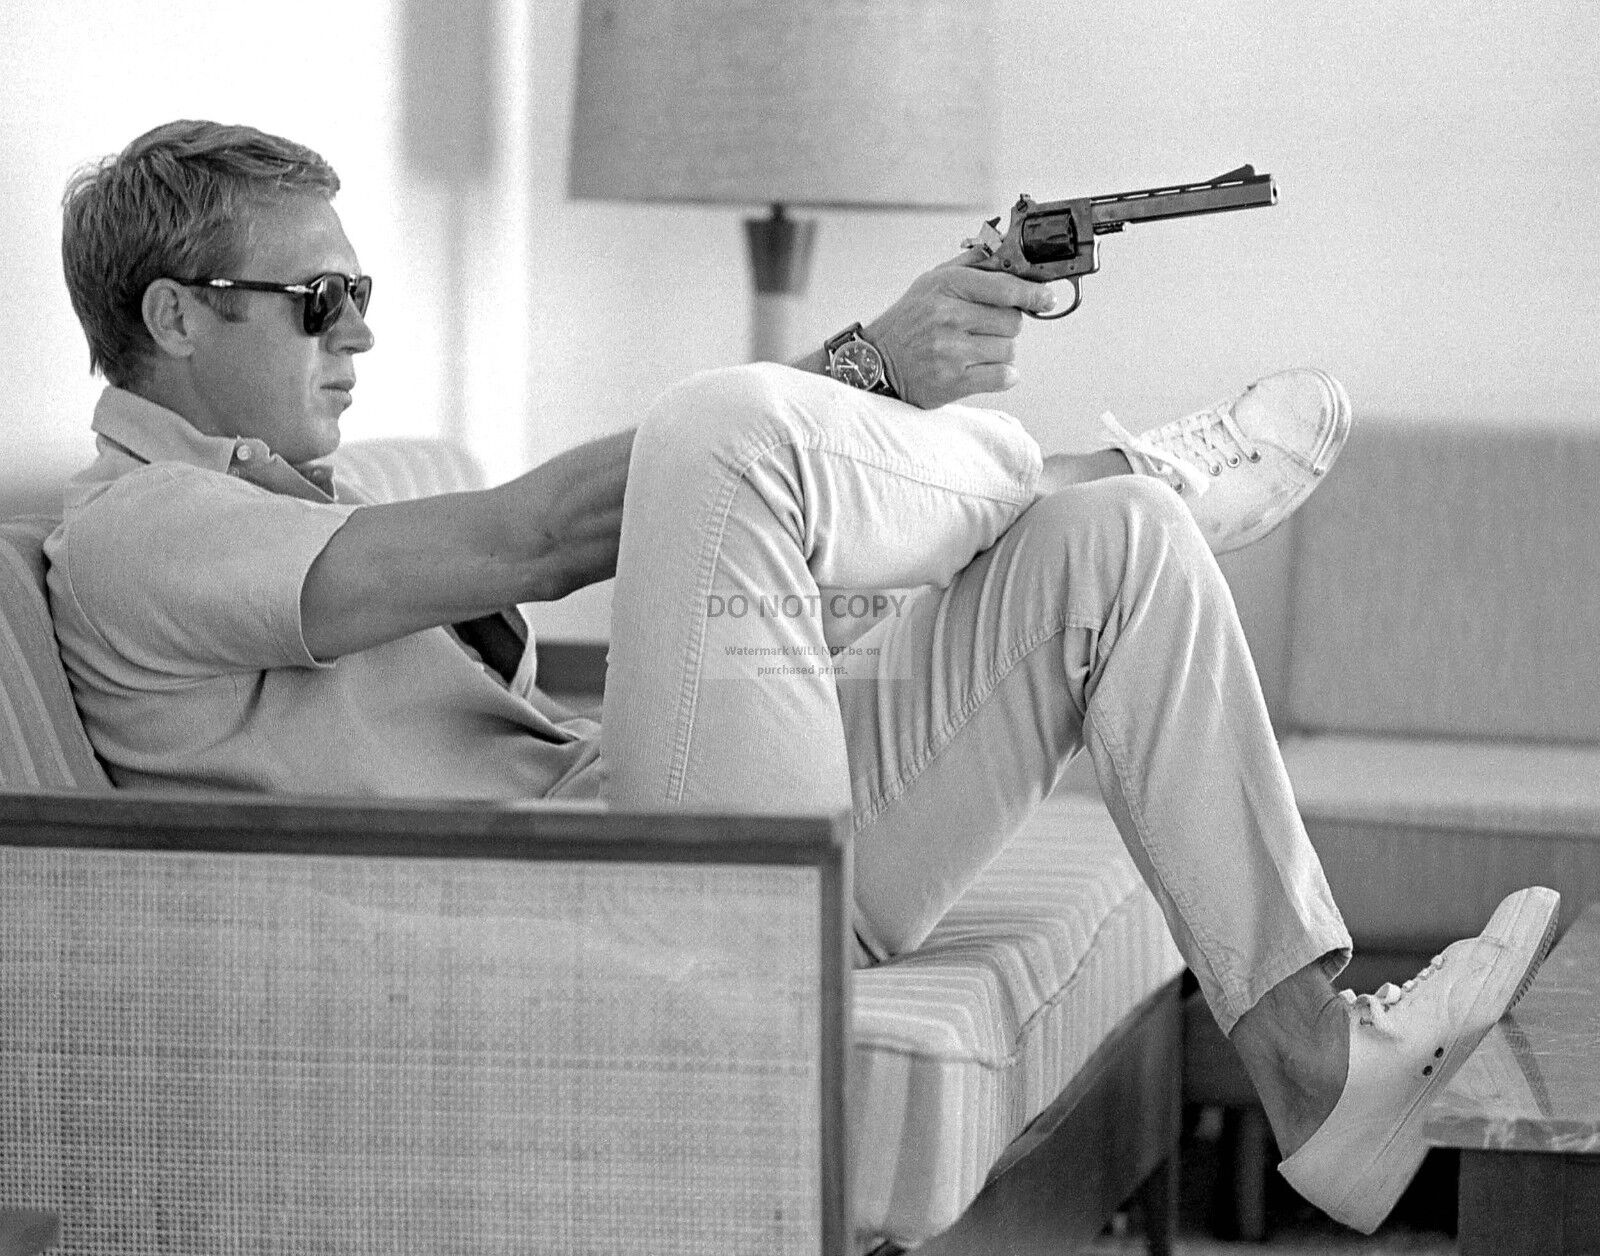 11X14 PHOTO - STEVE McQUEEN AIMS HAND GUN WHILE SITTING ON COUCH (LG185)